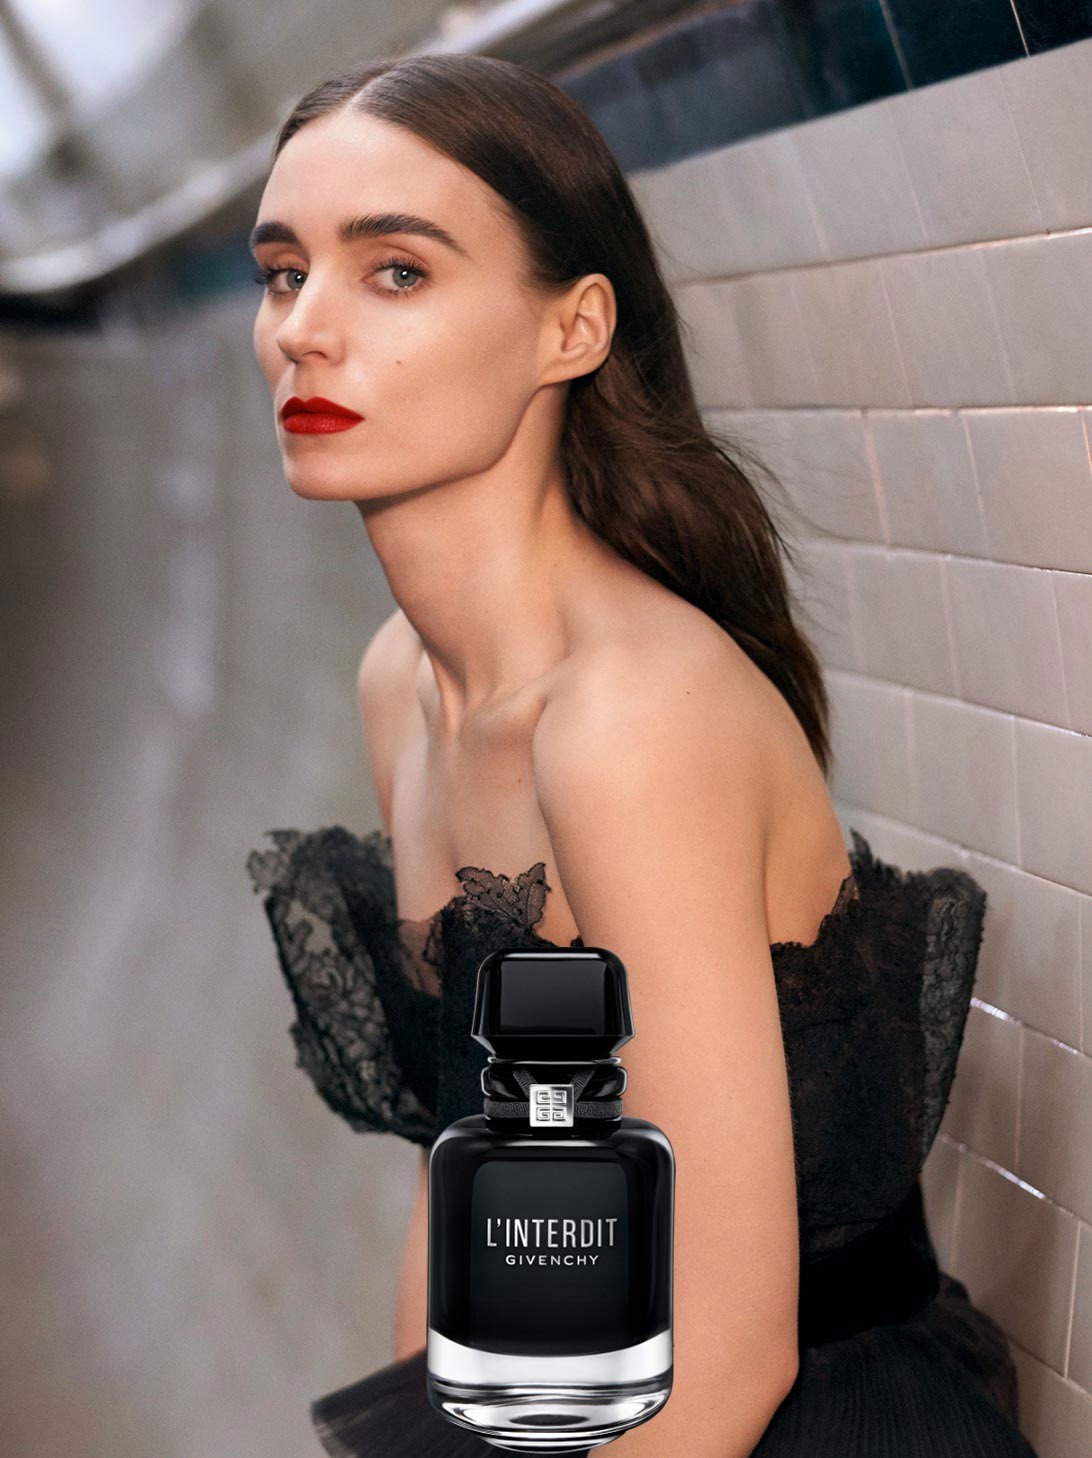 Givenchy L'Interdit Intense Perfume Ad